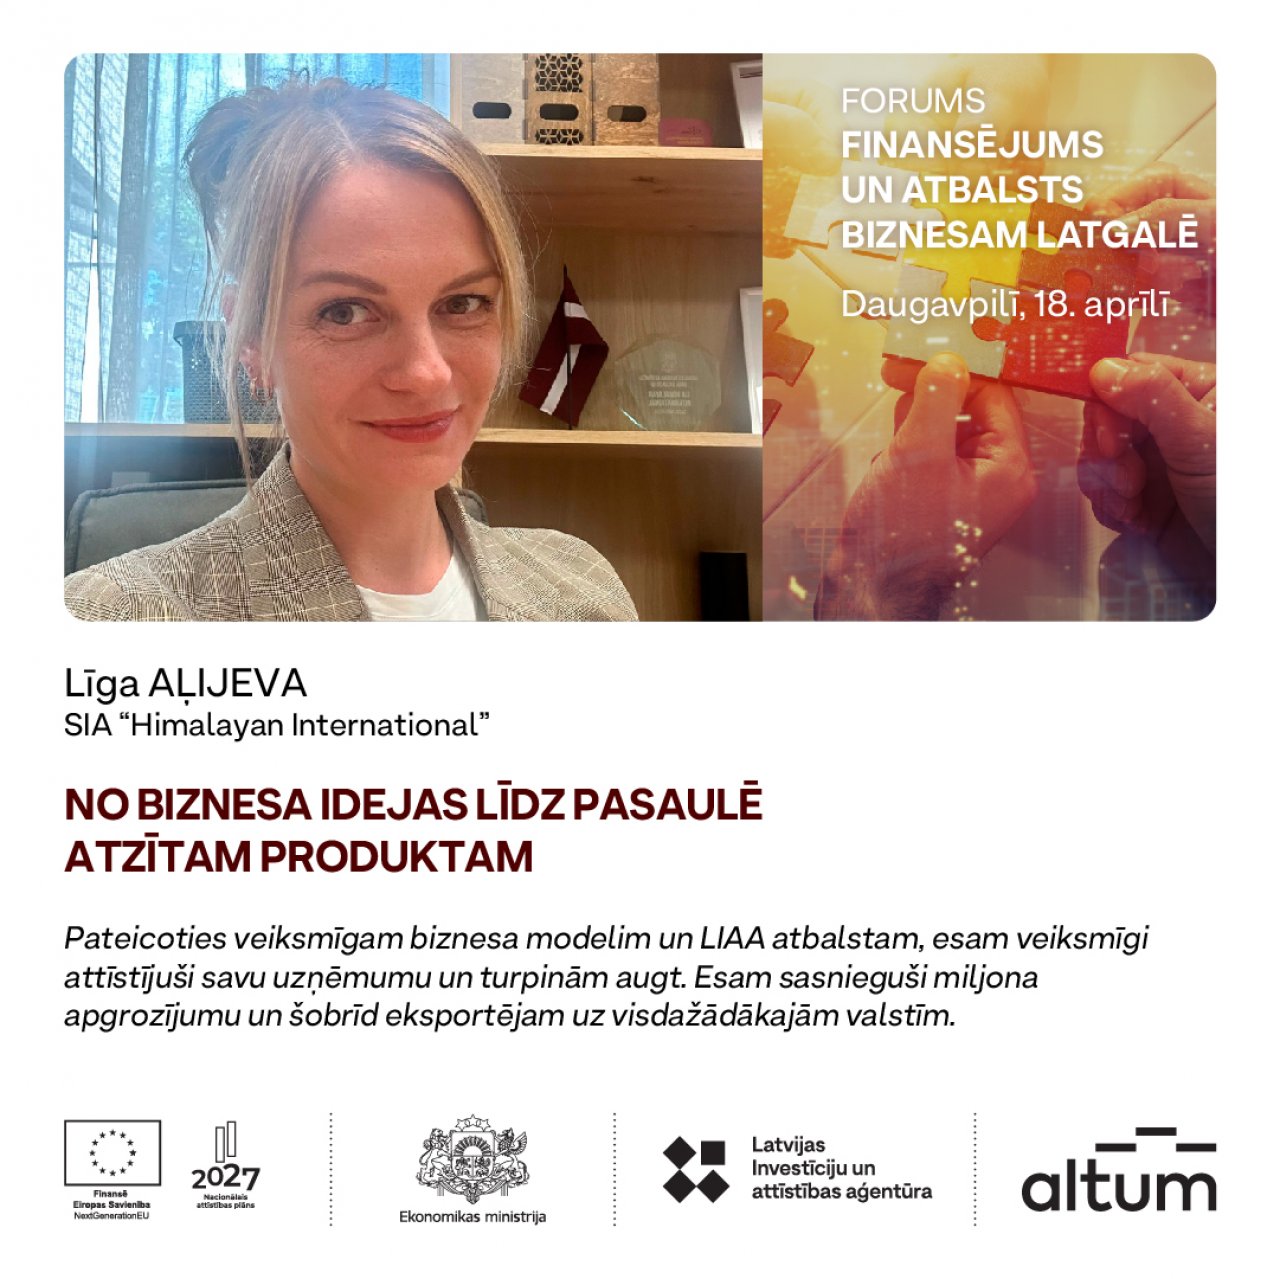 Līga Alijeva and SIA “Himalayan International” growth story